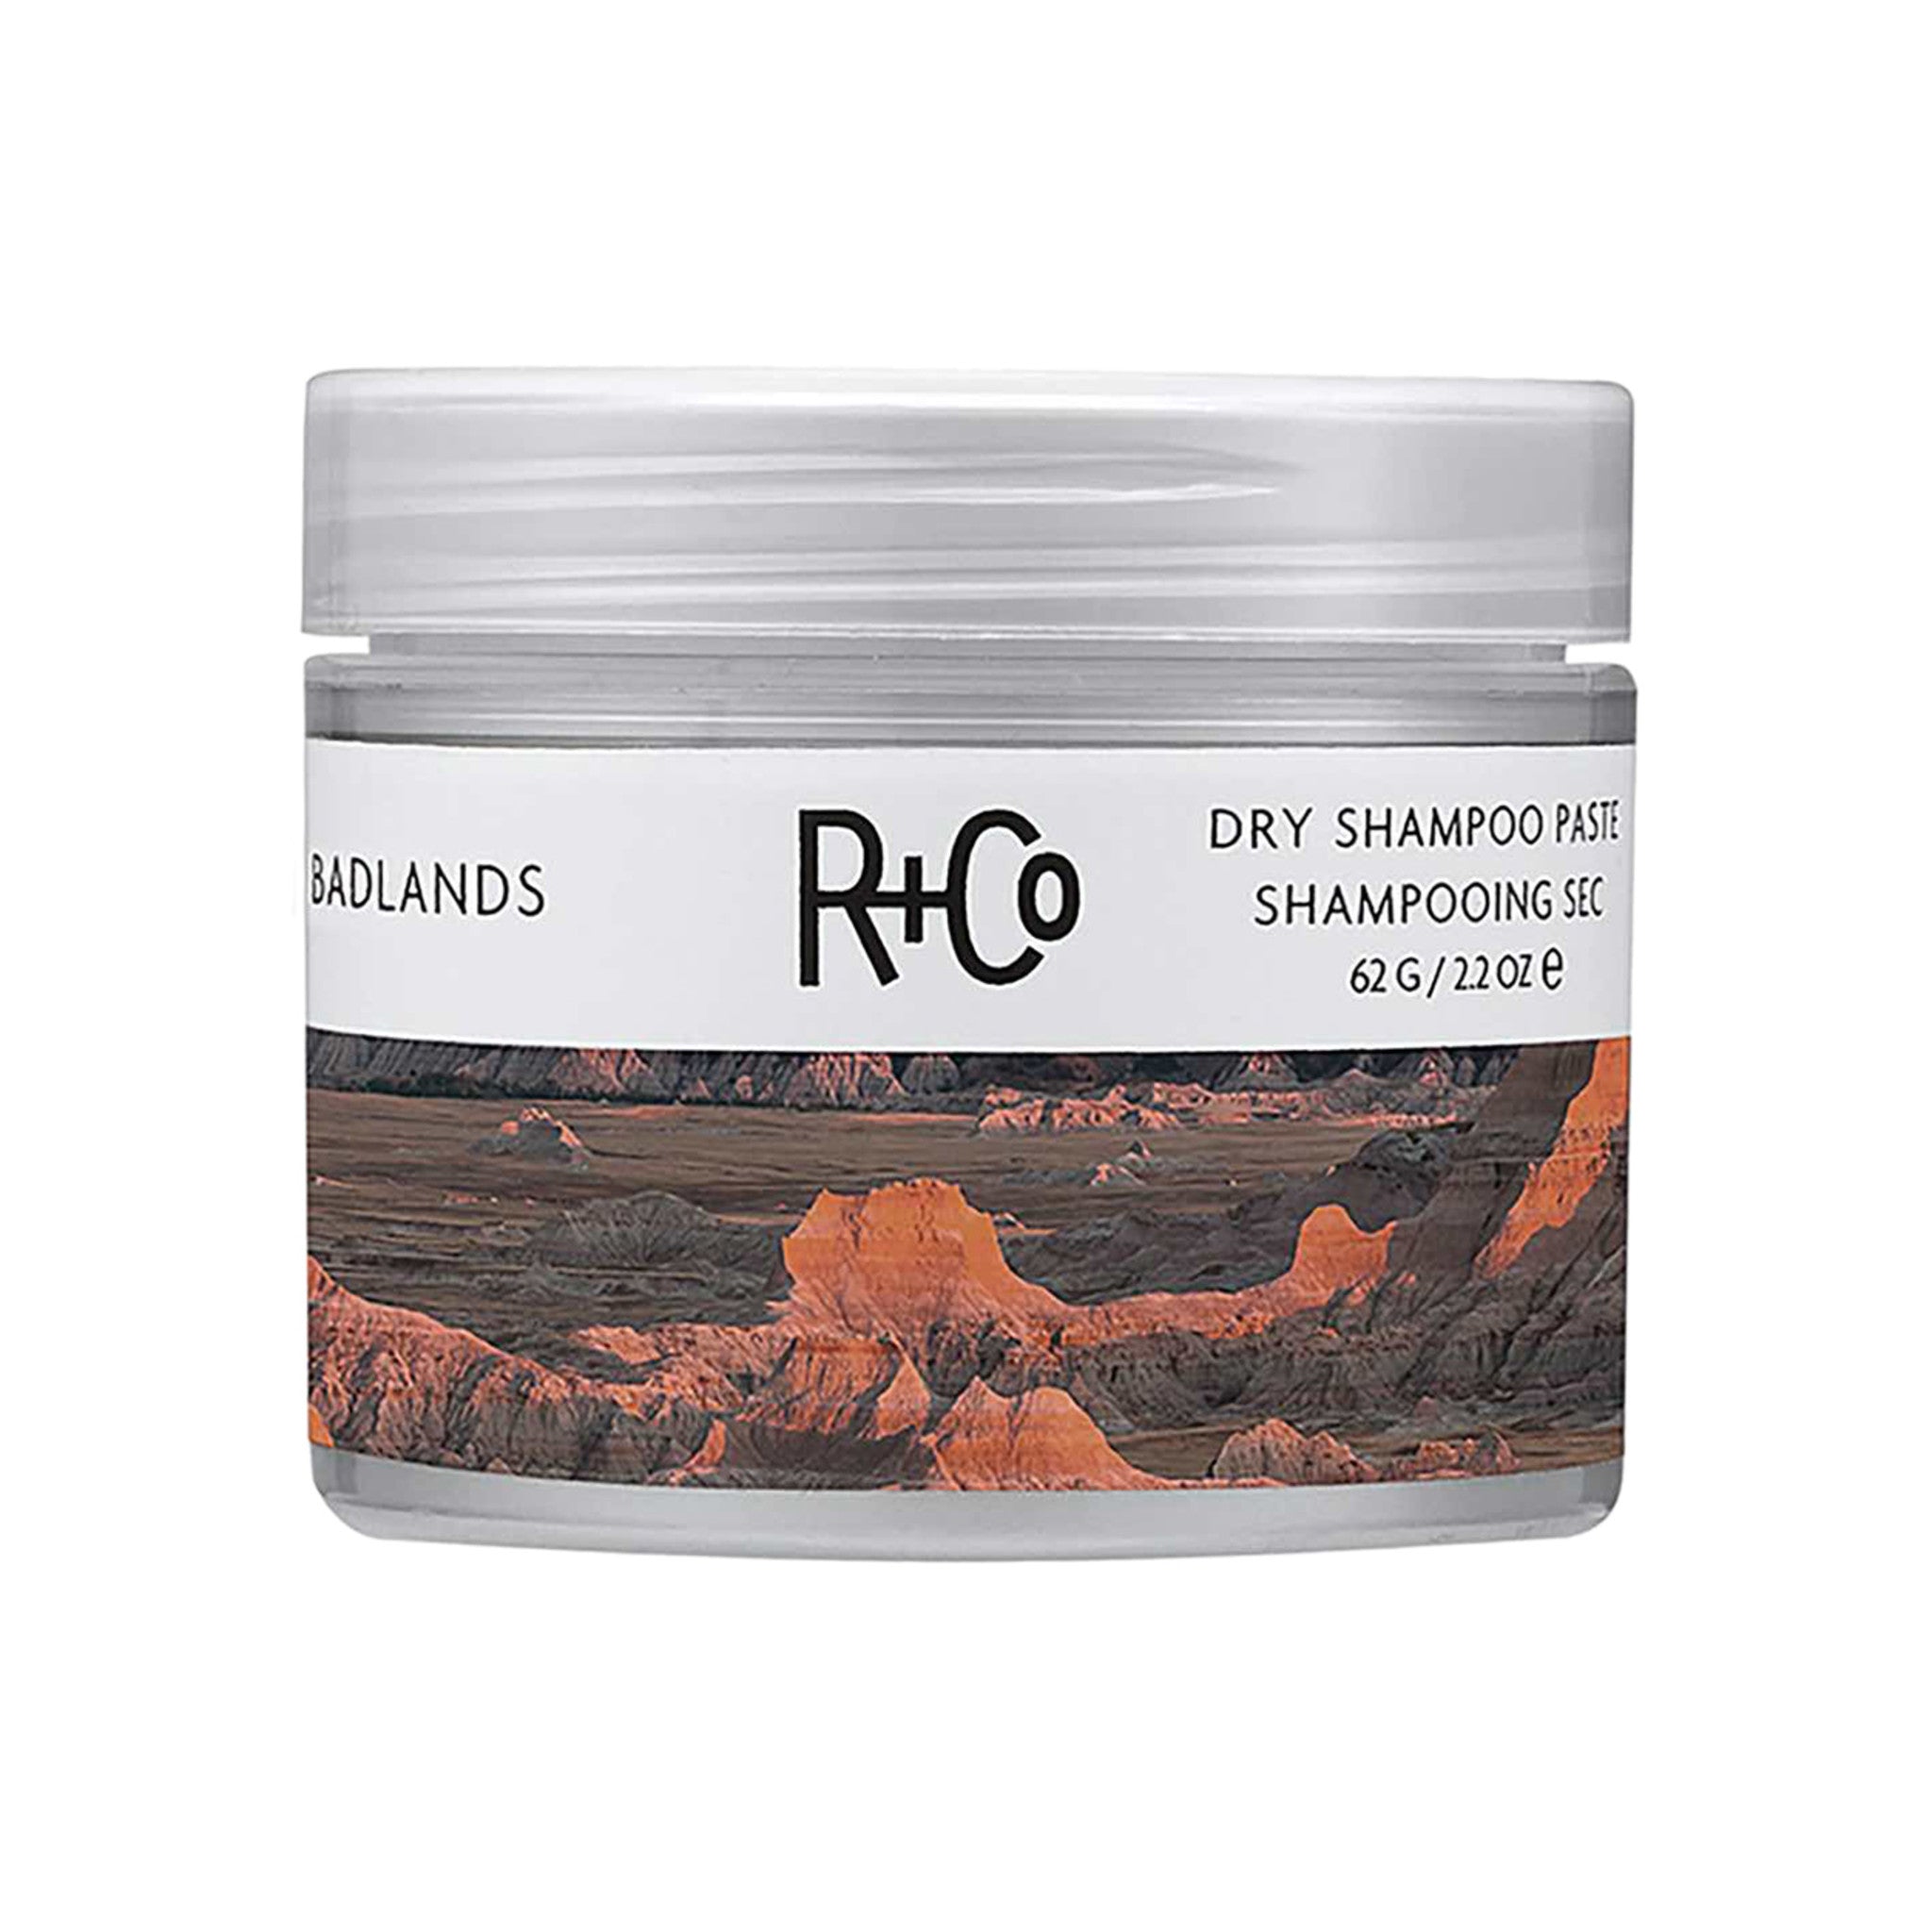 R+Co Badlands Dry Shampoo Paste main image.